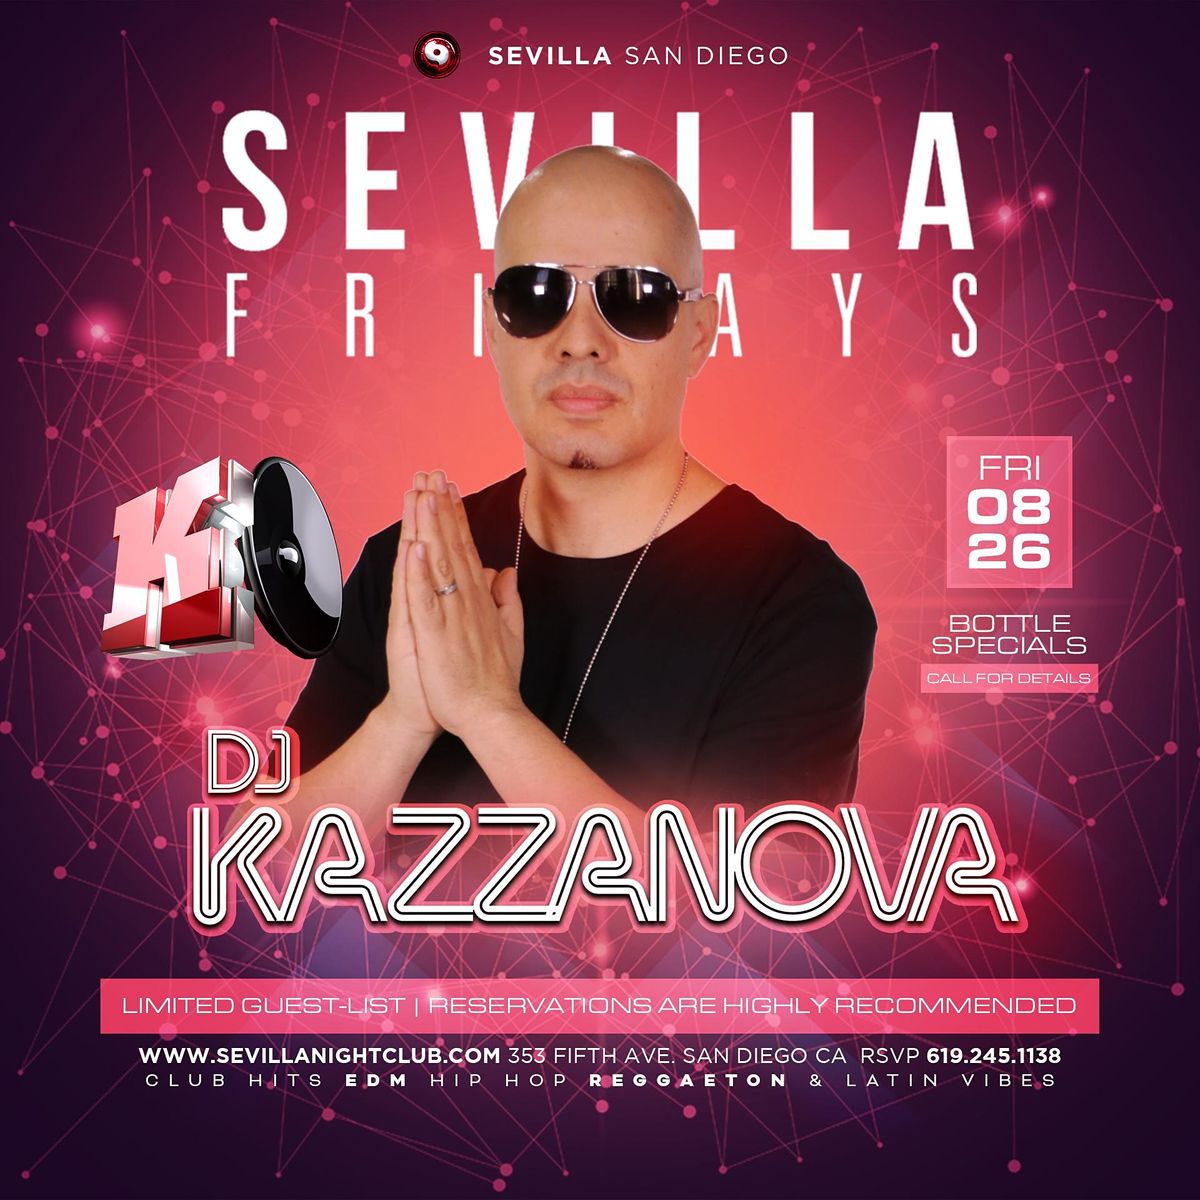 Sevilla Fridays - KAZZANOVA playing all club hits, top 40s & more.